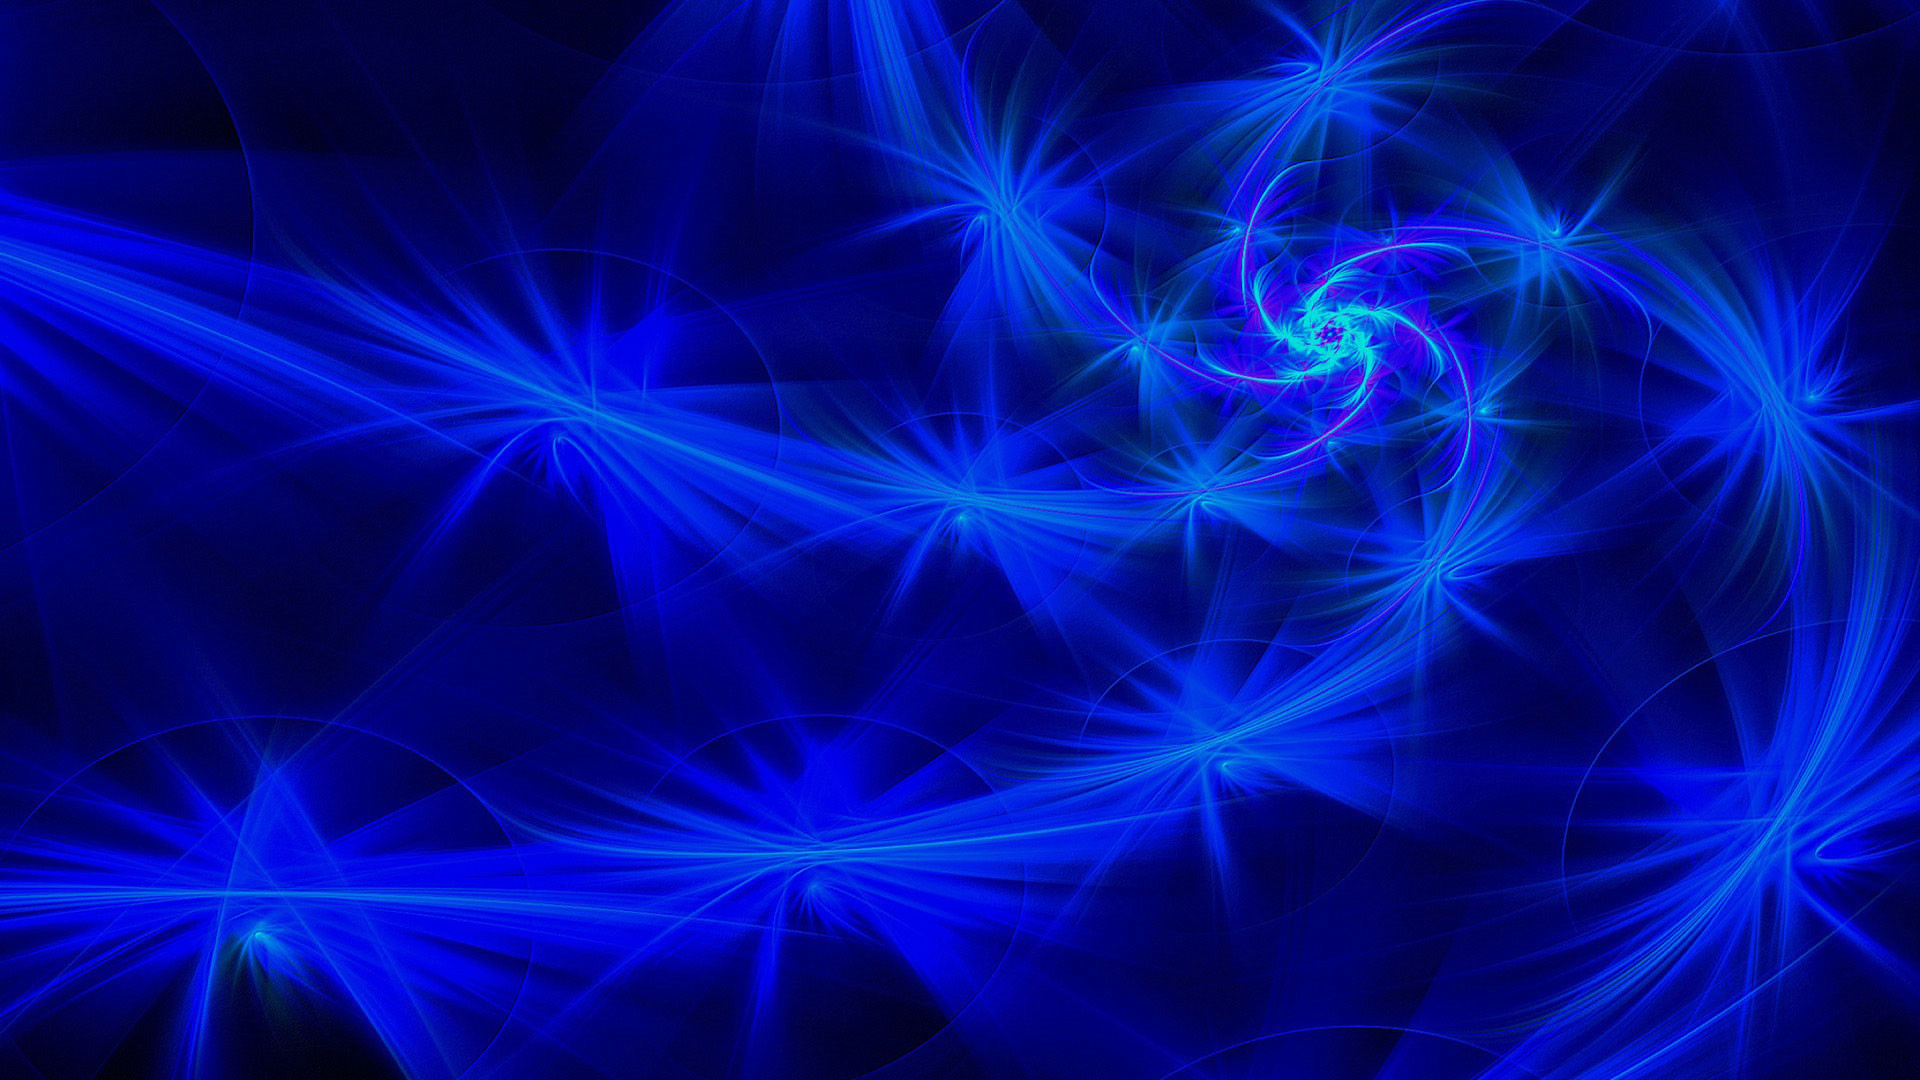 1920x1080 hd pics photos neon blue neon blue abstract desktop background wallpaper